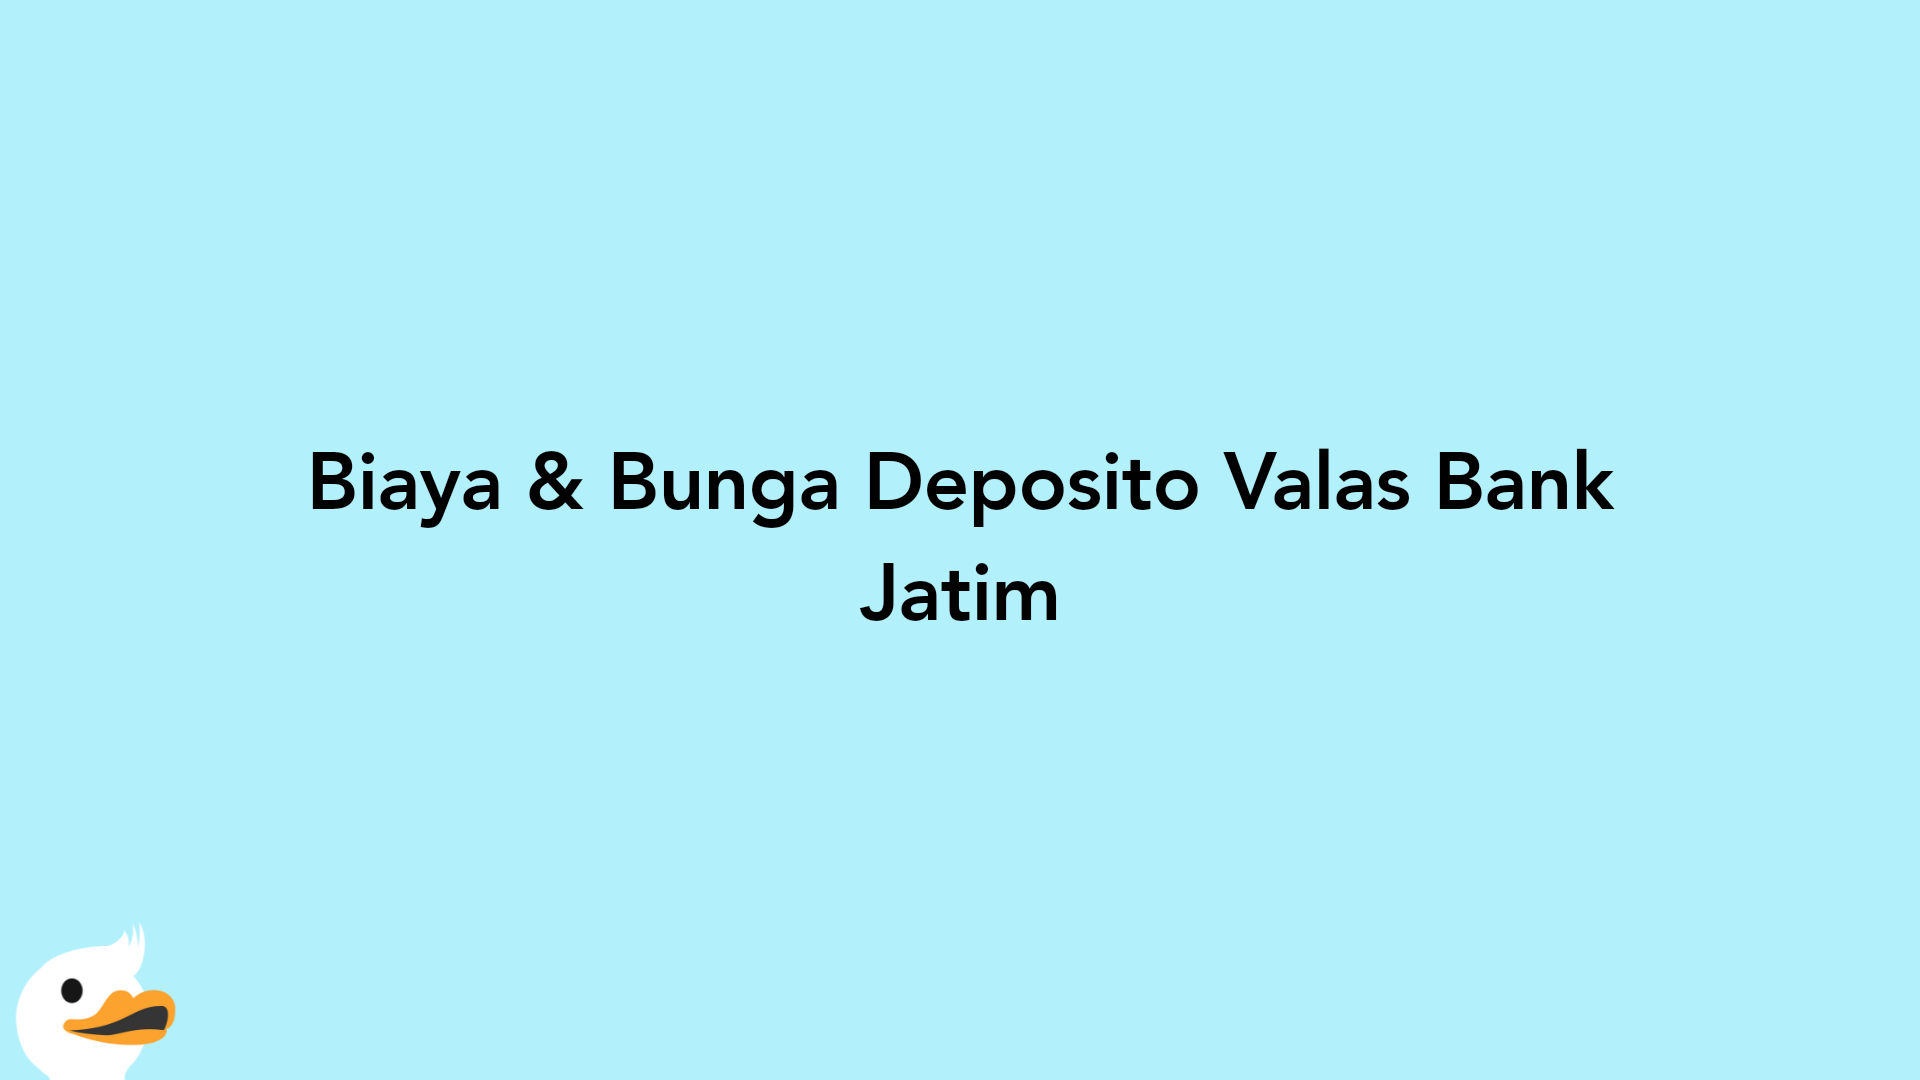 Biaya & Bunga Deposito Valas Bank Jatim